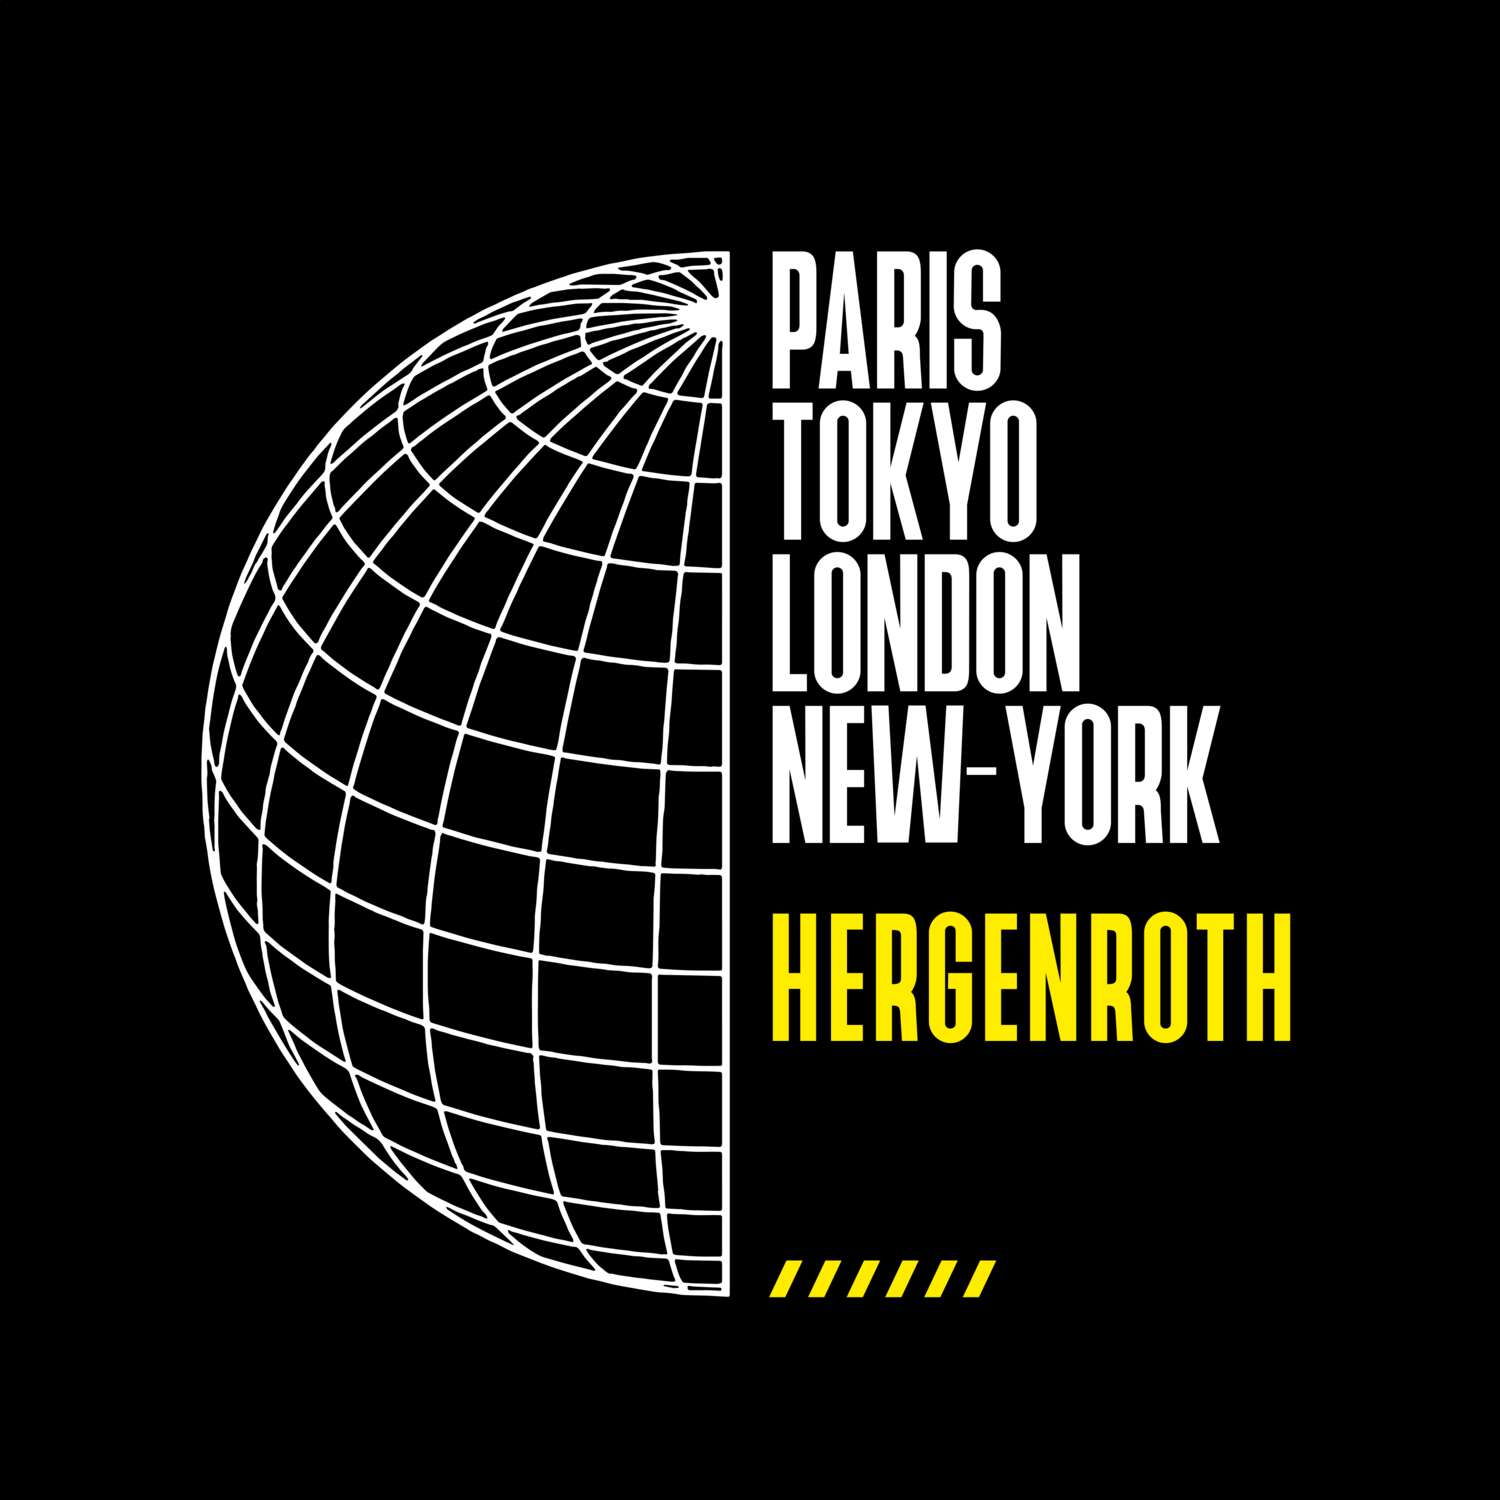 Hergenroth T-Shirt »Paris Tokyo London«